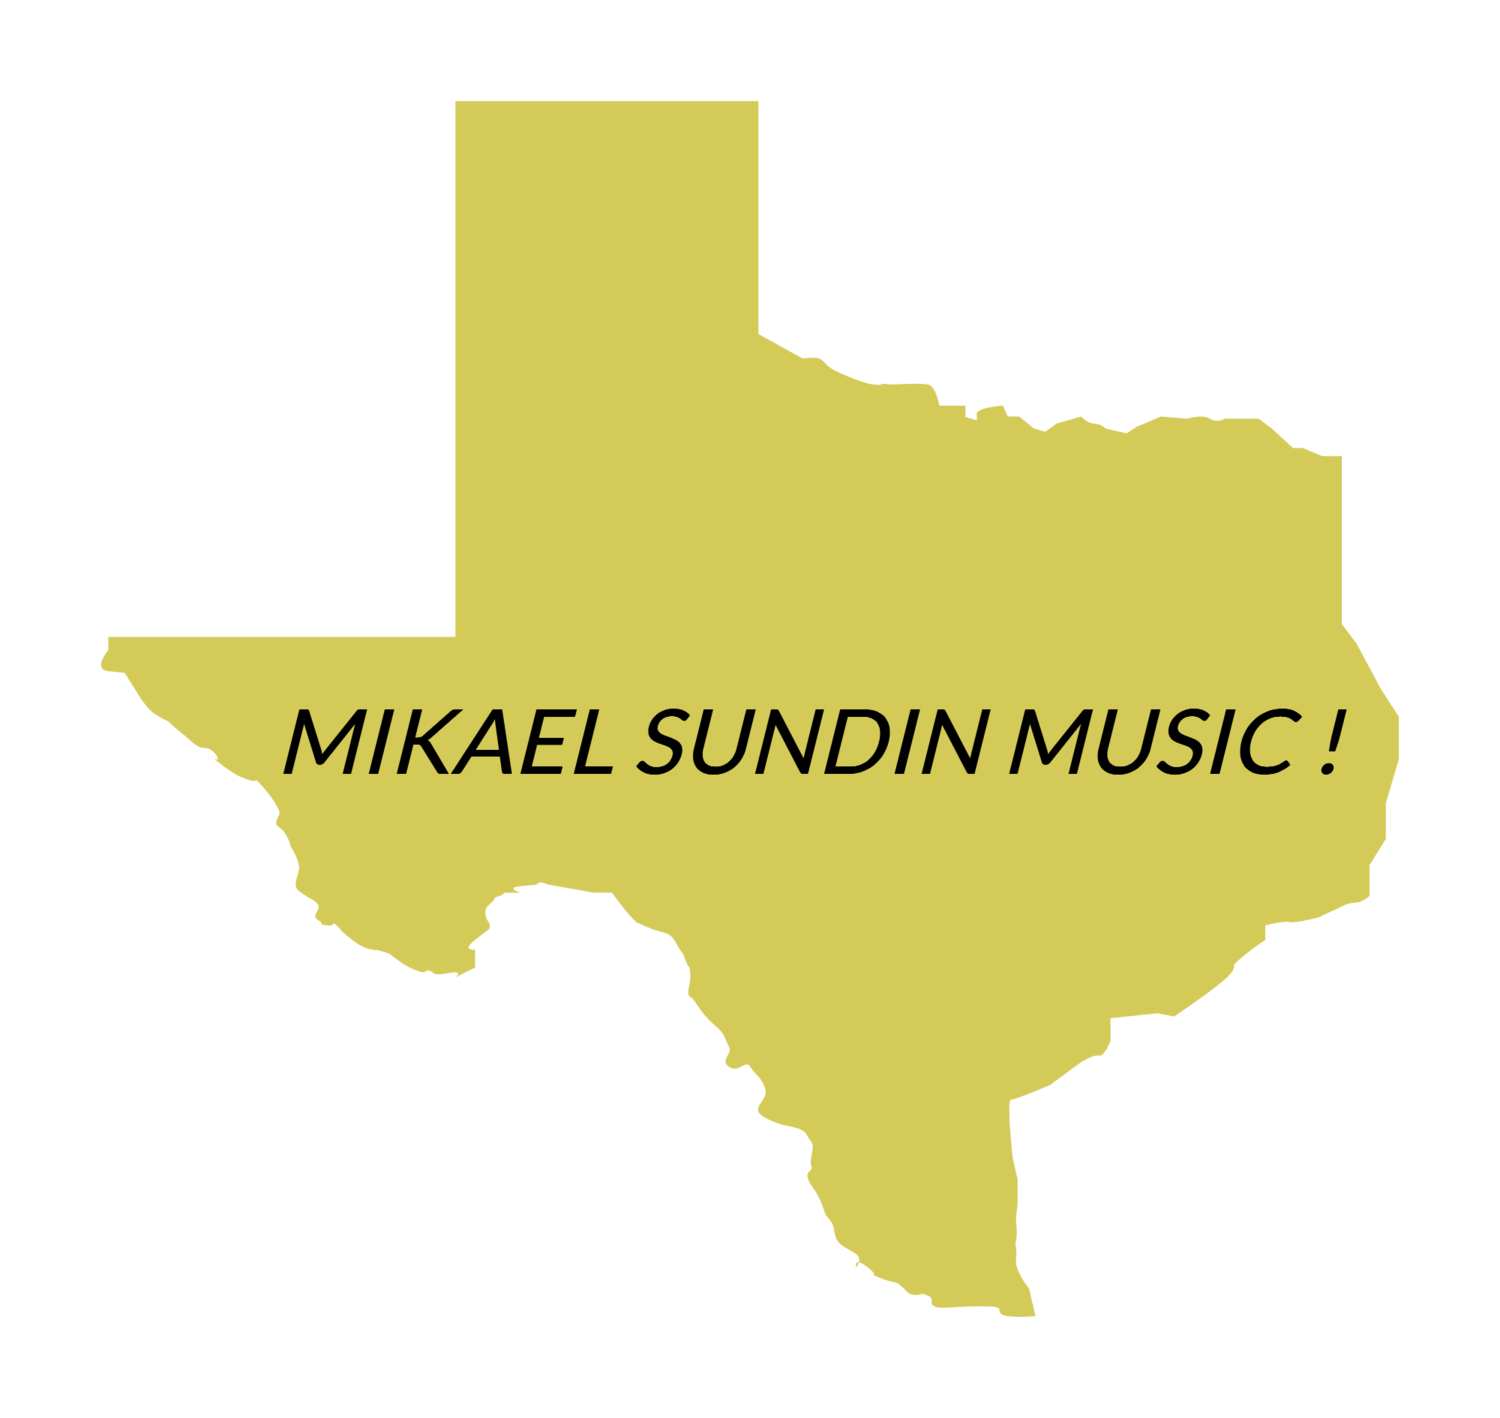 MIKAEL SUNDIN MUSIC